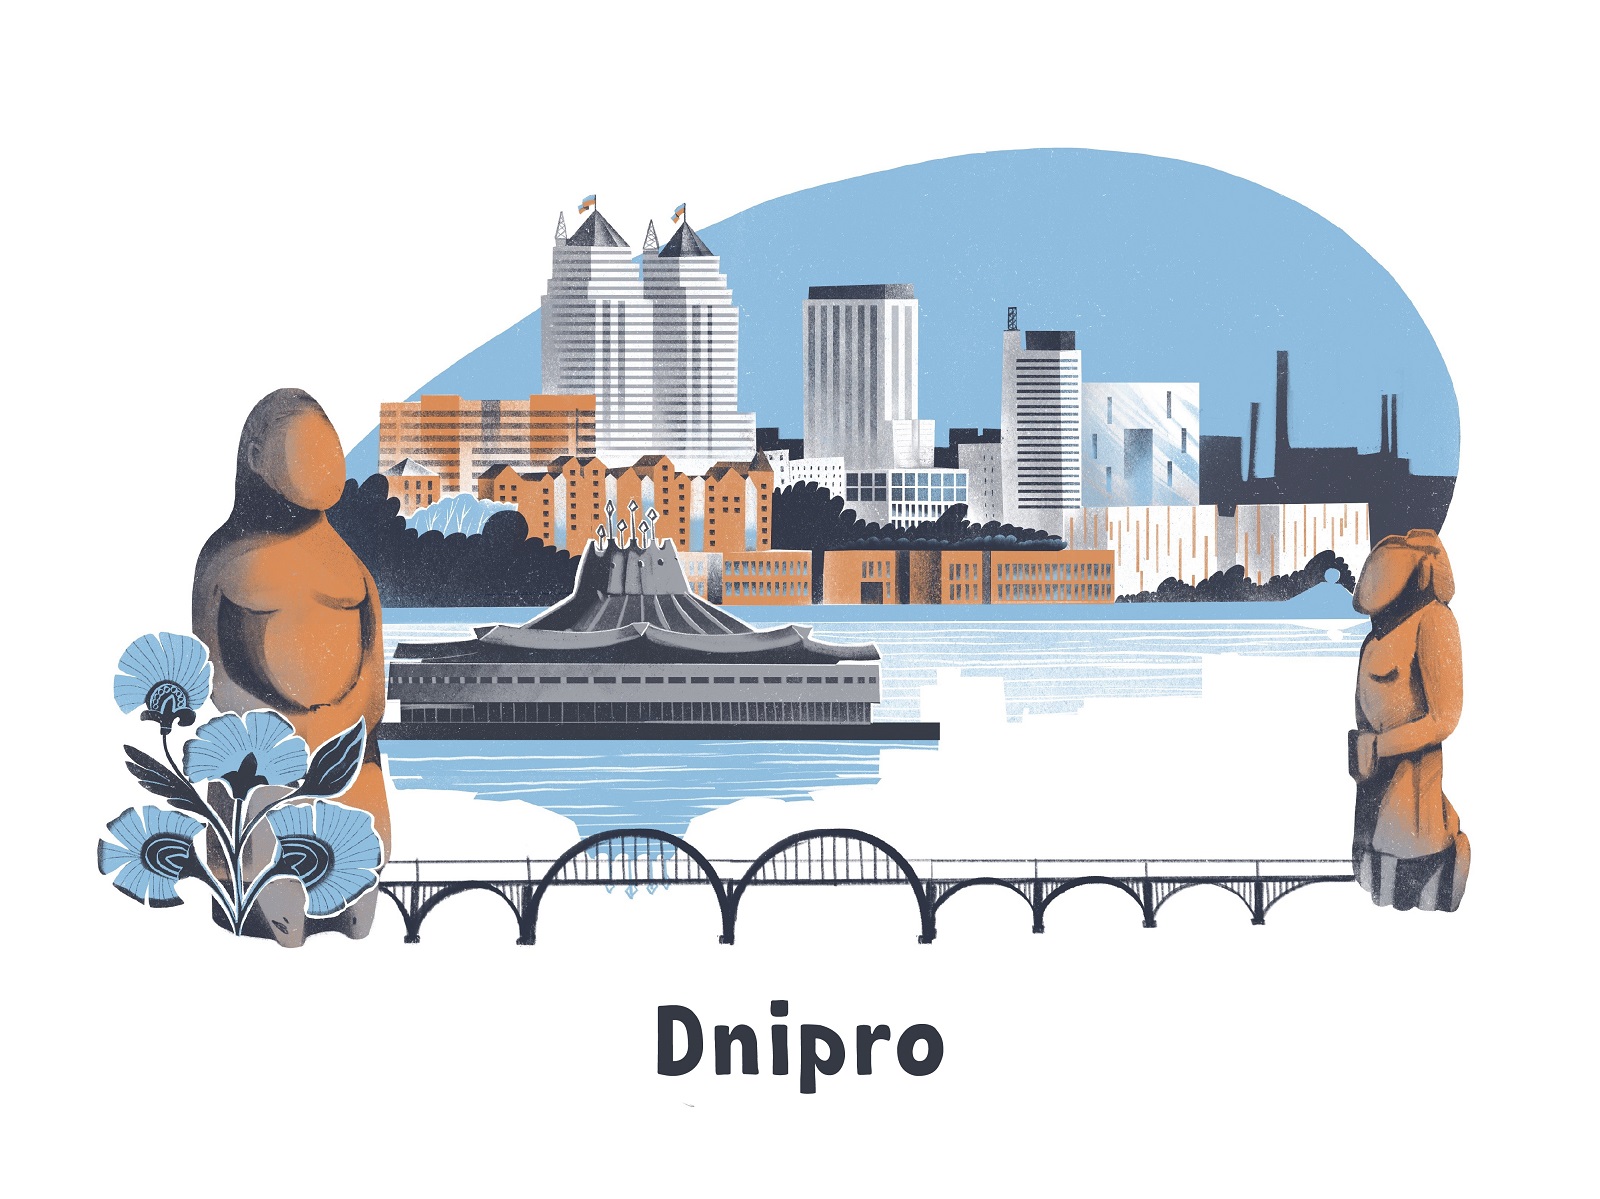 cities-of-Ukraine-Dnipro-tubikarts-illustration-reduced